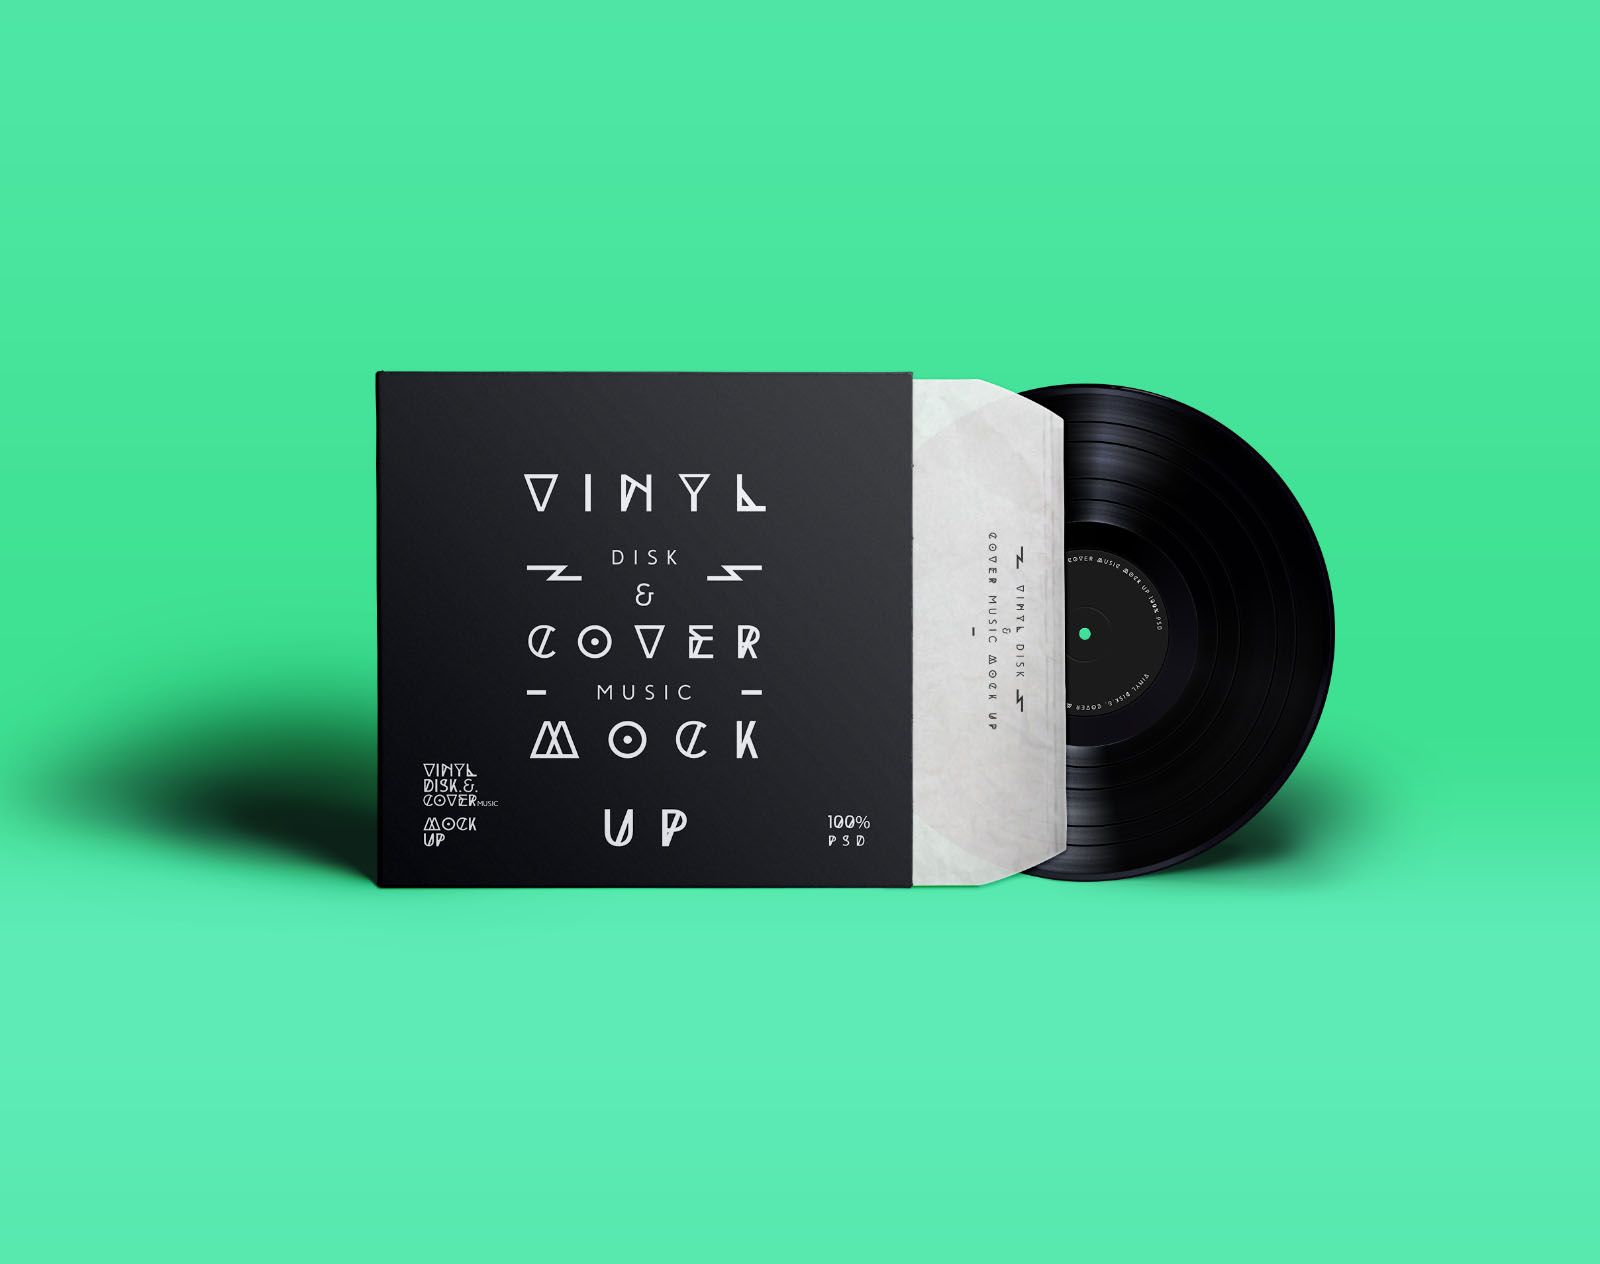 Vinyl Cover & Sleeve Record Mockup